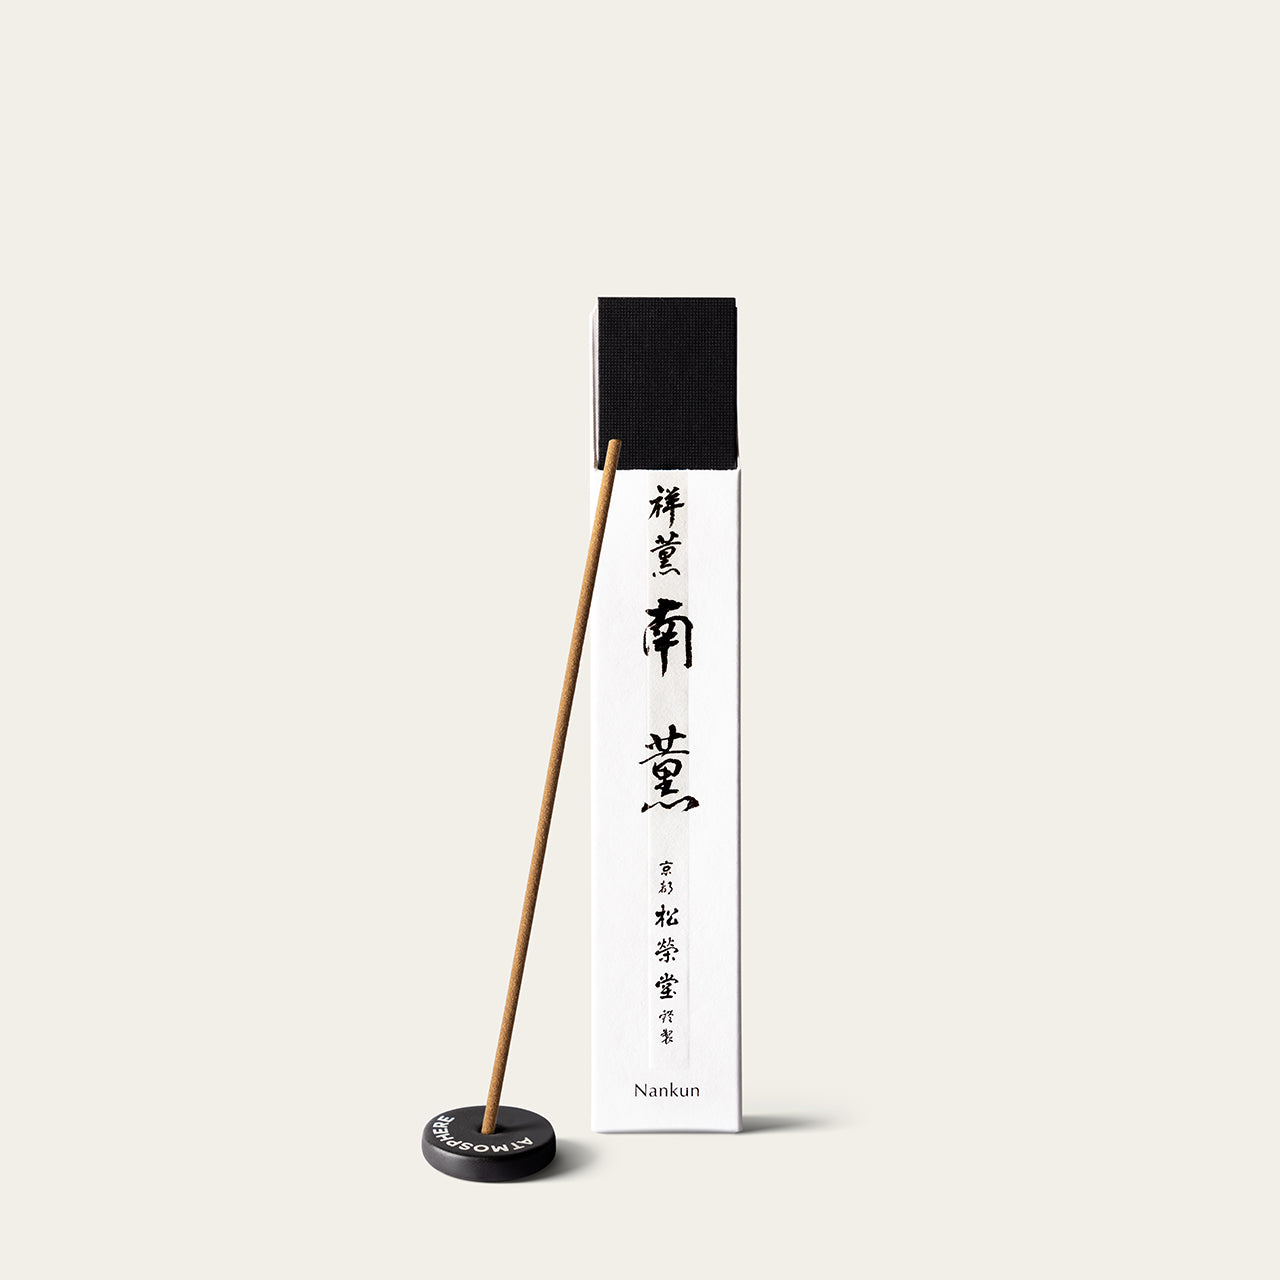 Shoyeido Premium Southern Wind Nankun Japanese incense sticks (15 sticks) with Atmosphere ceramic incense holder